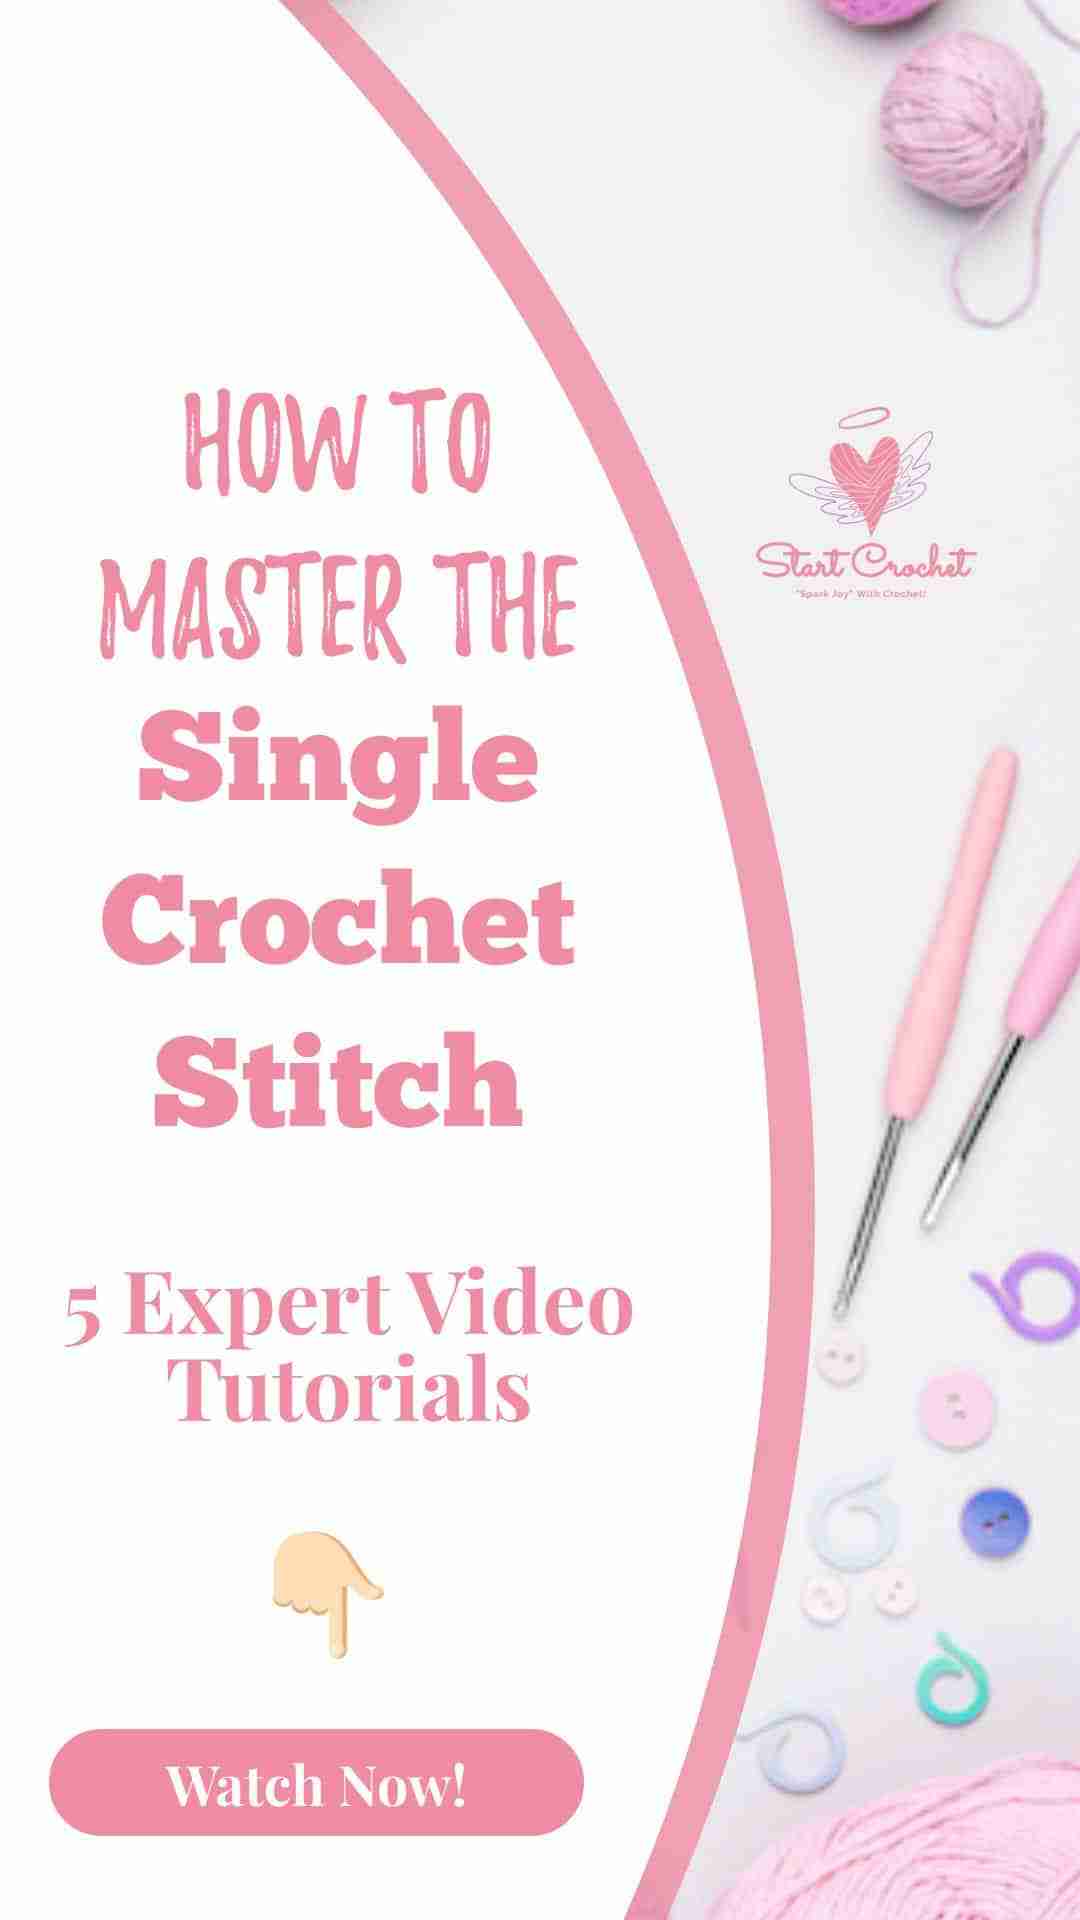 How To Mater The Single Crochet Stitch Start Crochet 1 (1)